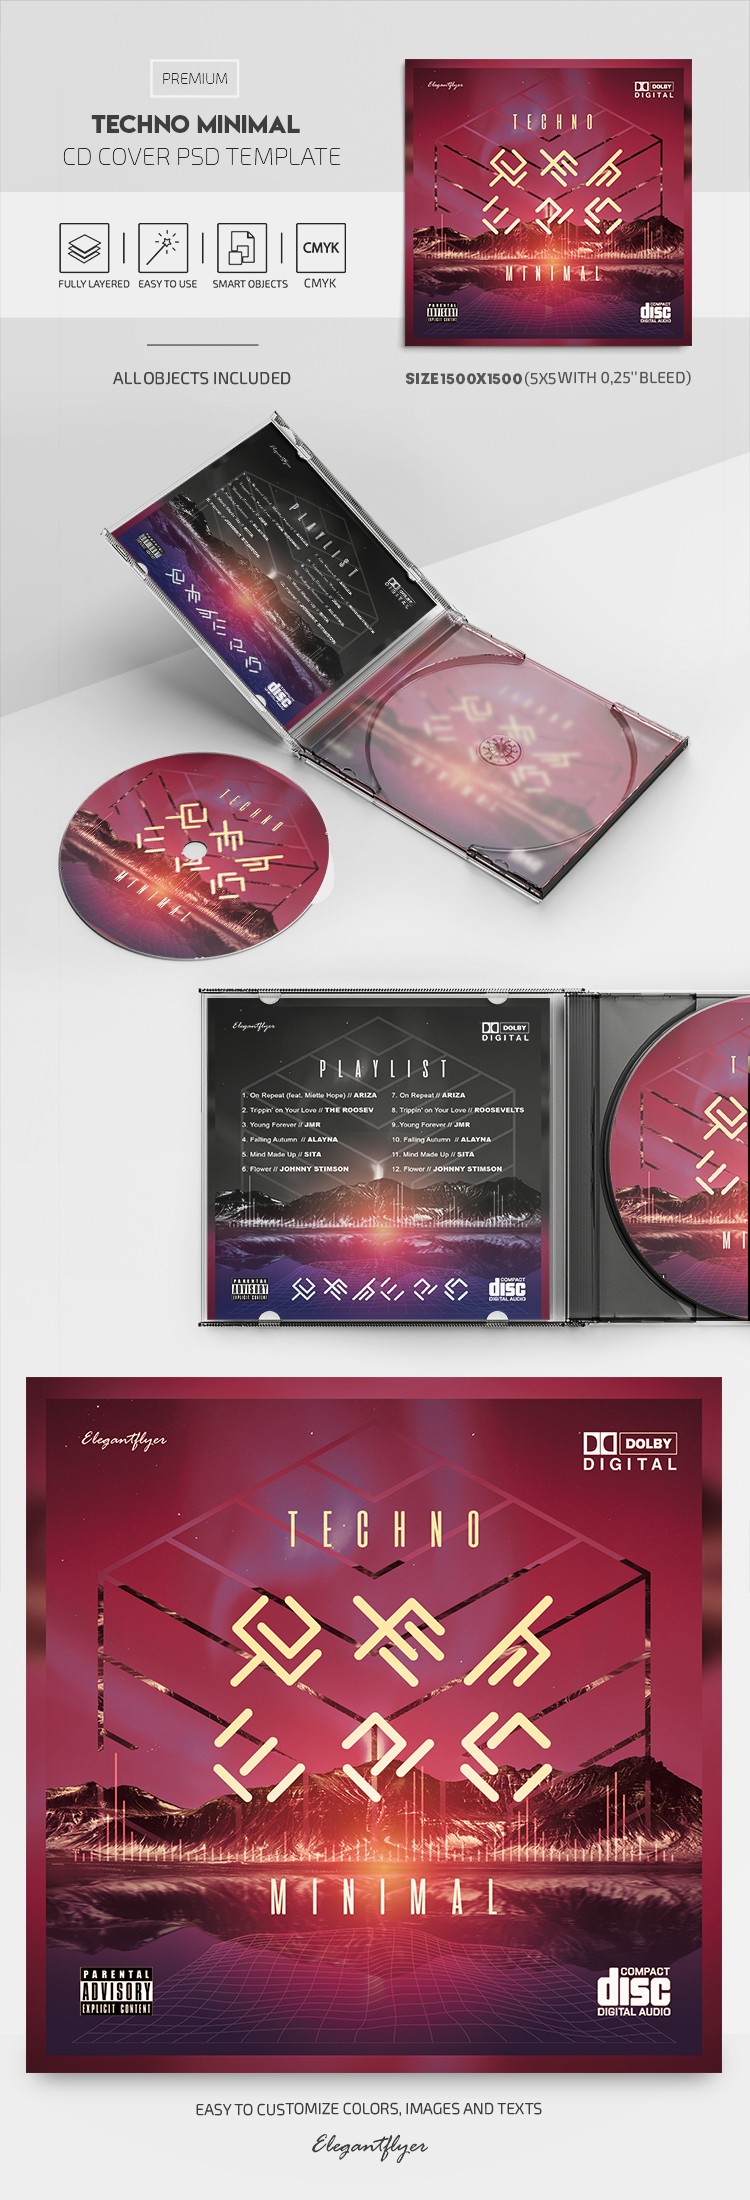 Okładka CD Techno Minimal by ElegantFlyer